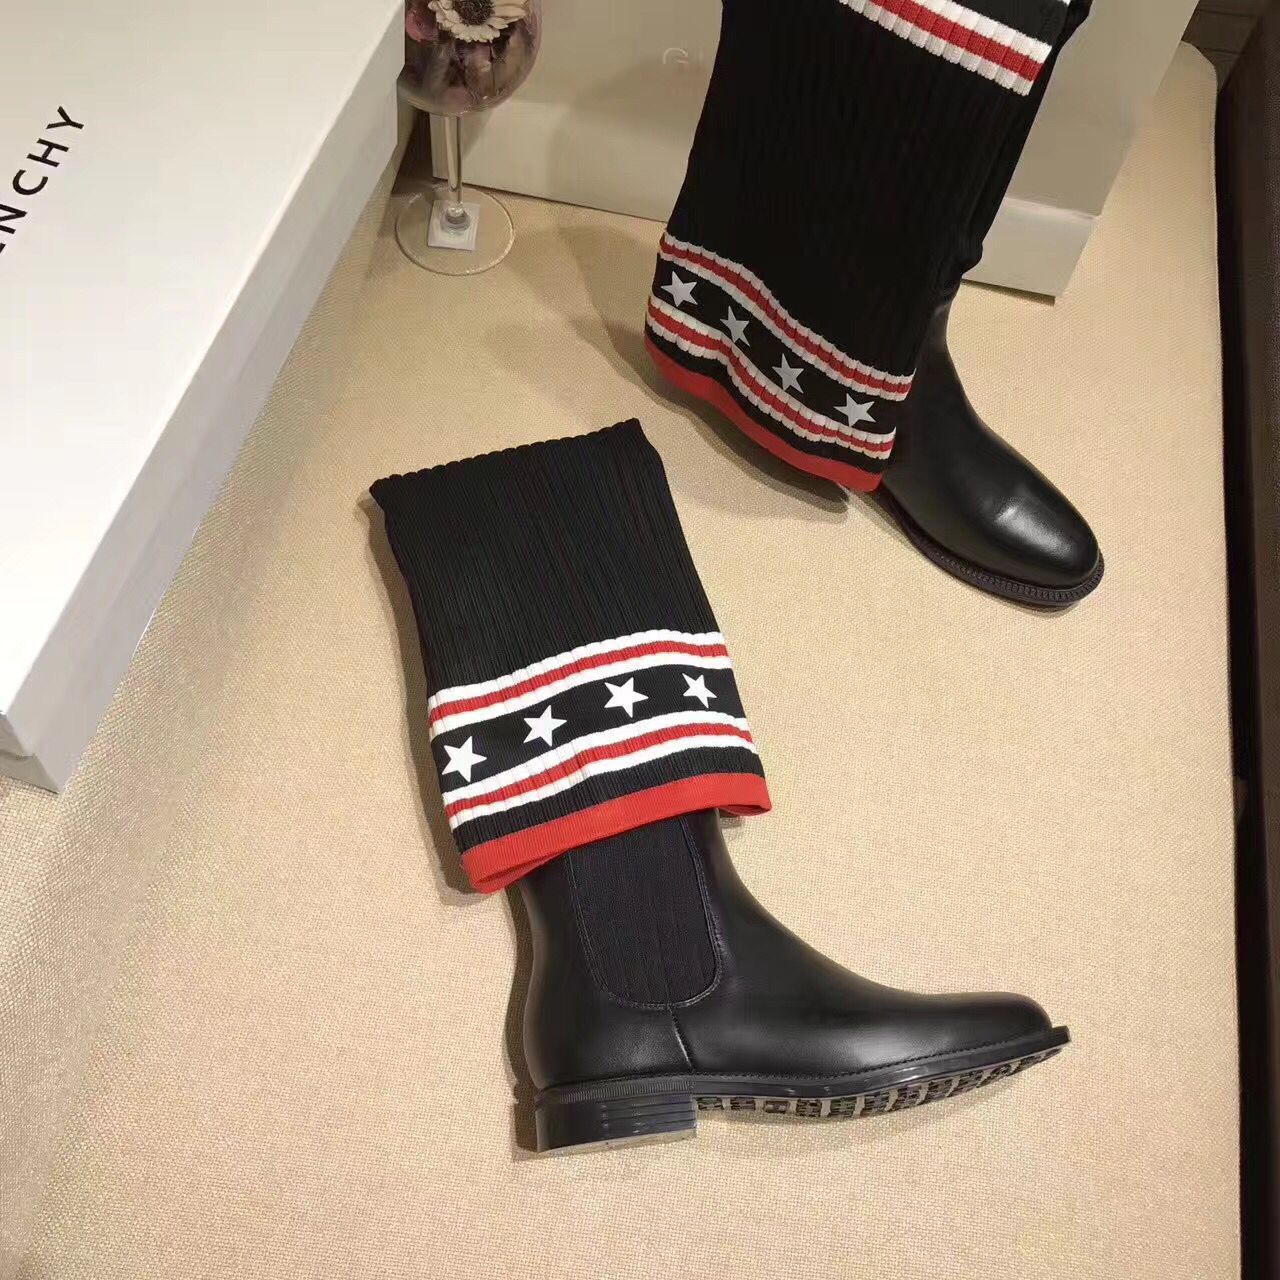 Givenchy Fashion Style Knee Socks Boots 86249 Black